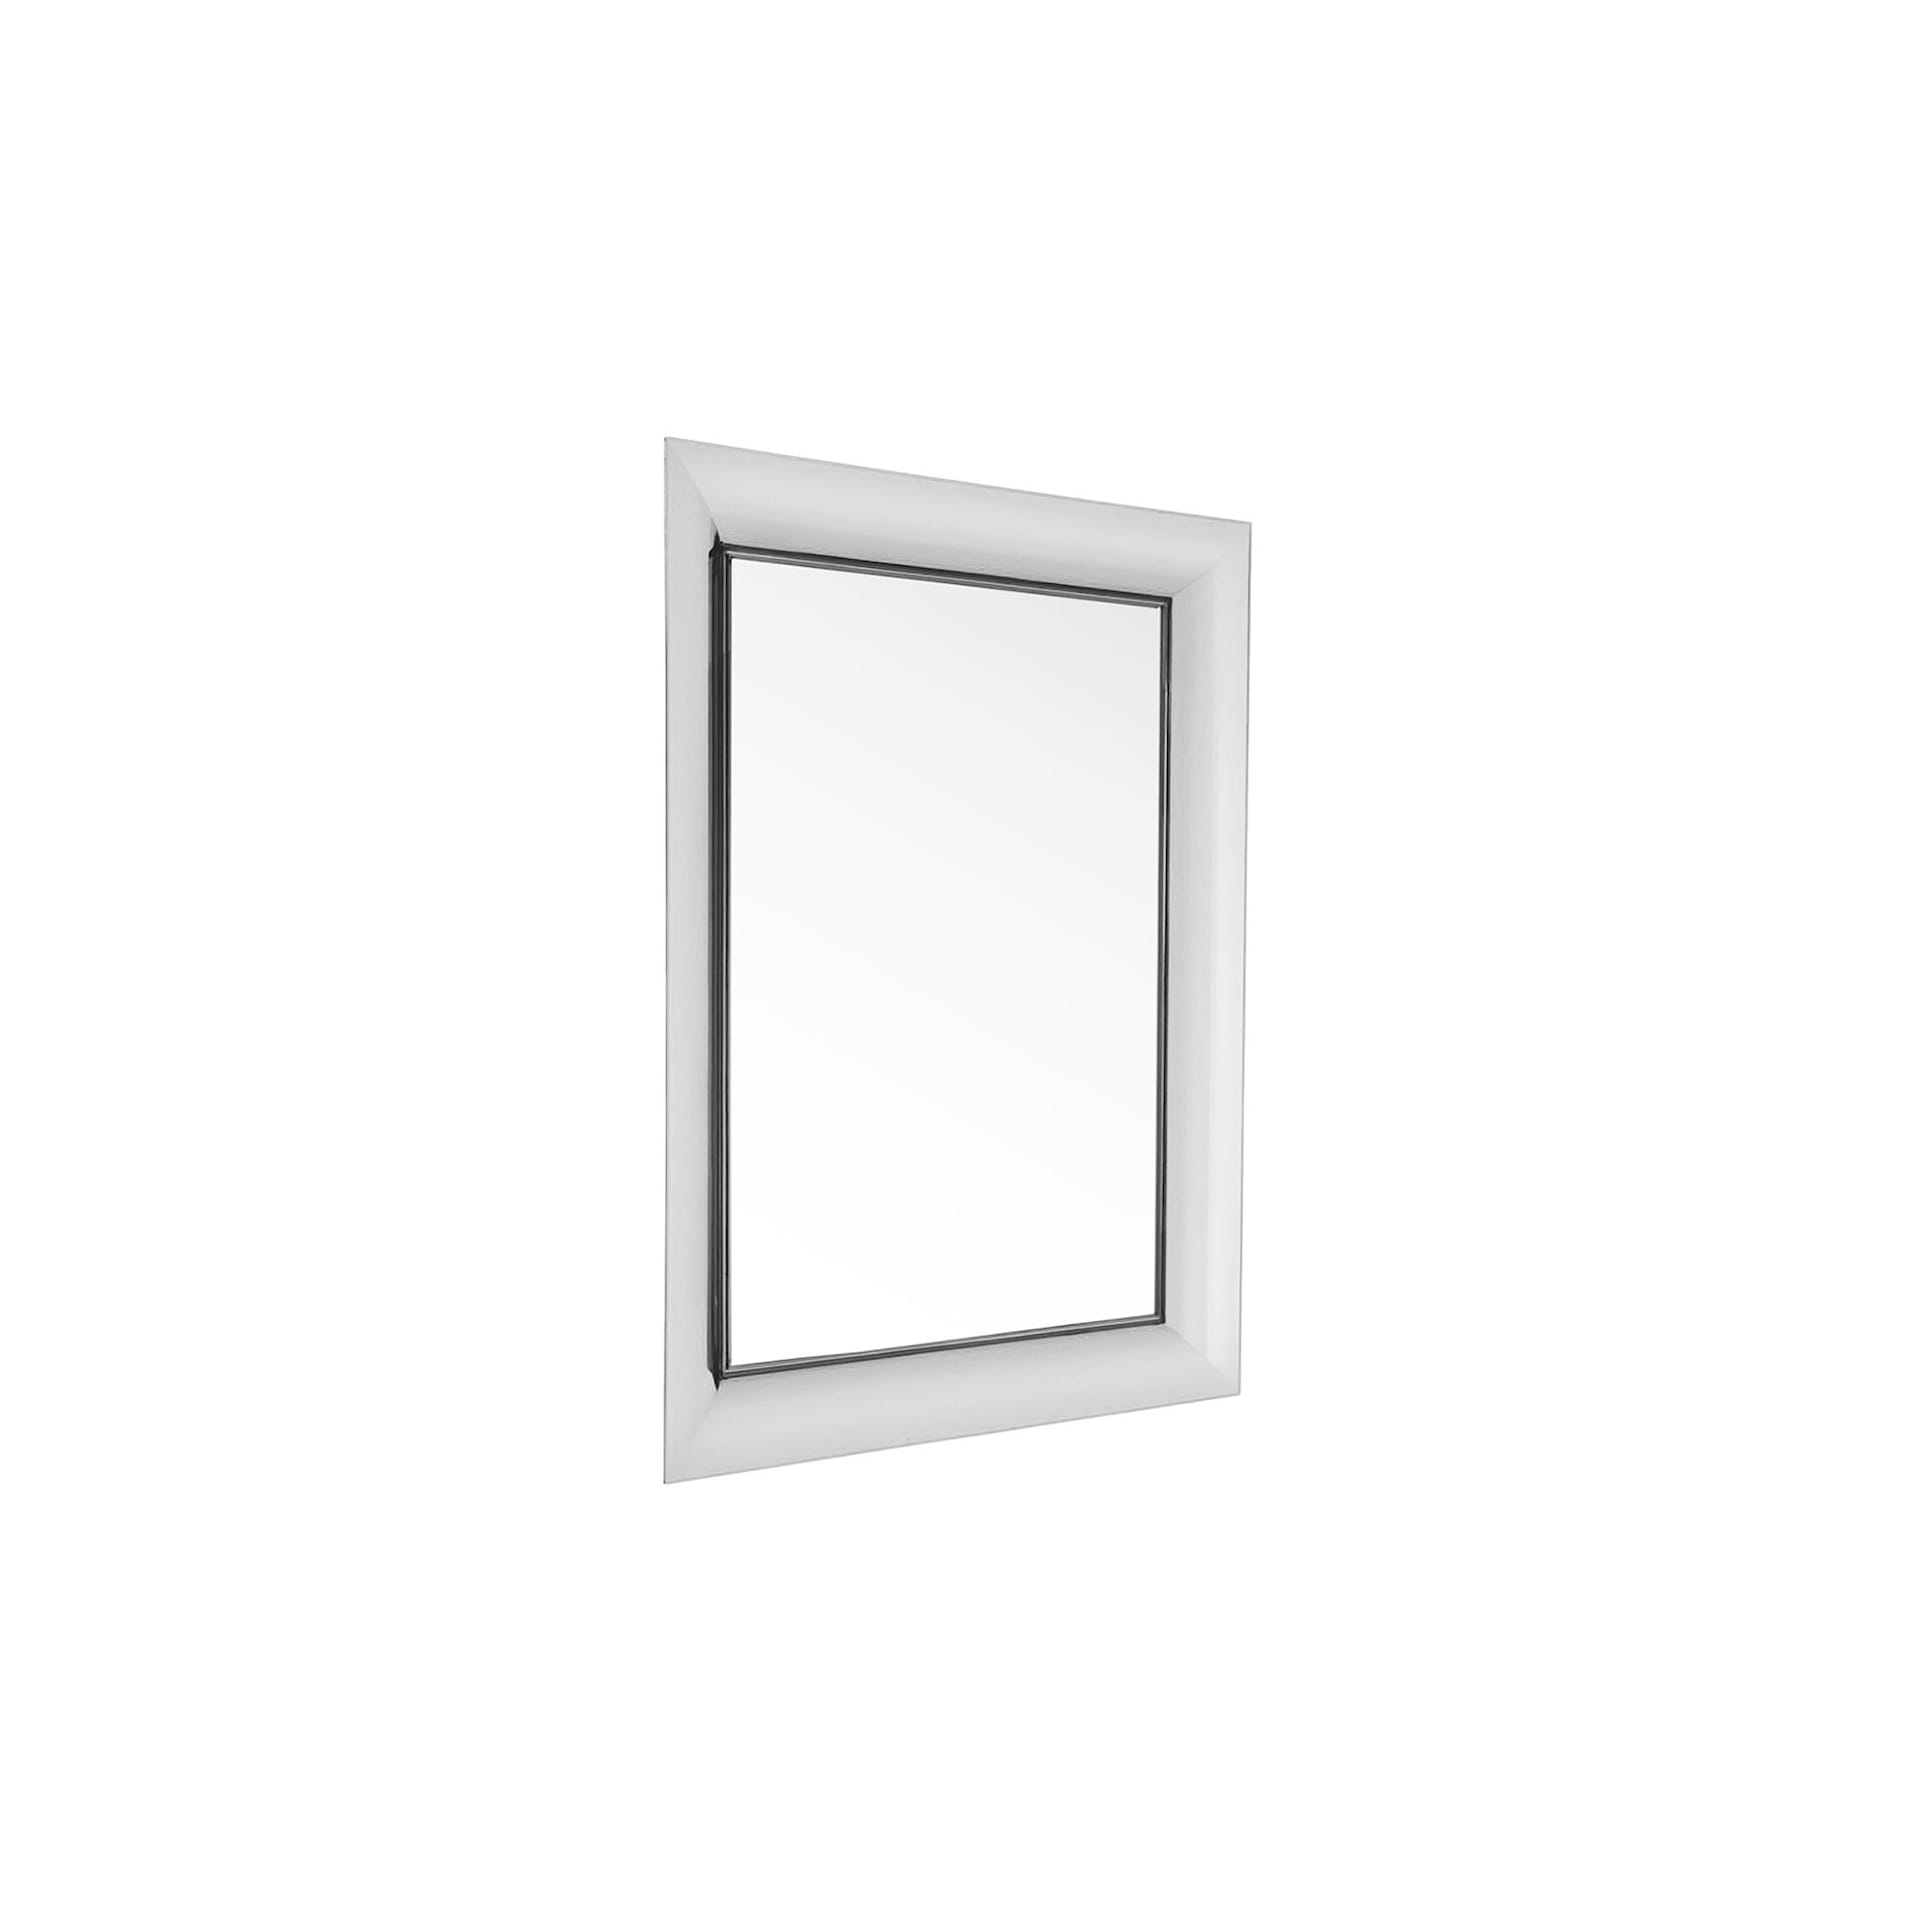 Francois Ghost Mirror 79 x 65 cm - Kartell - Philippe Starck - NO GA